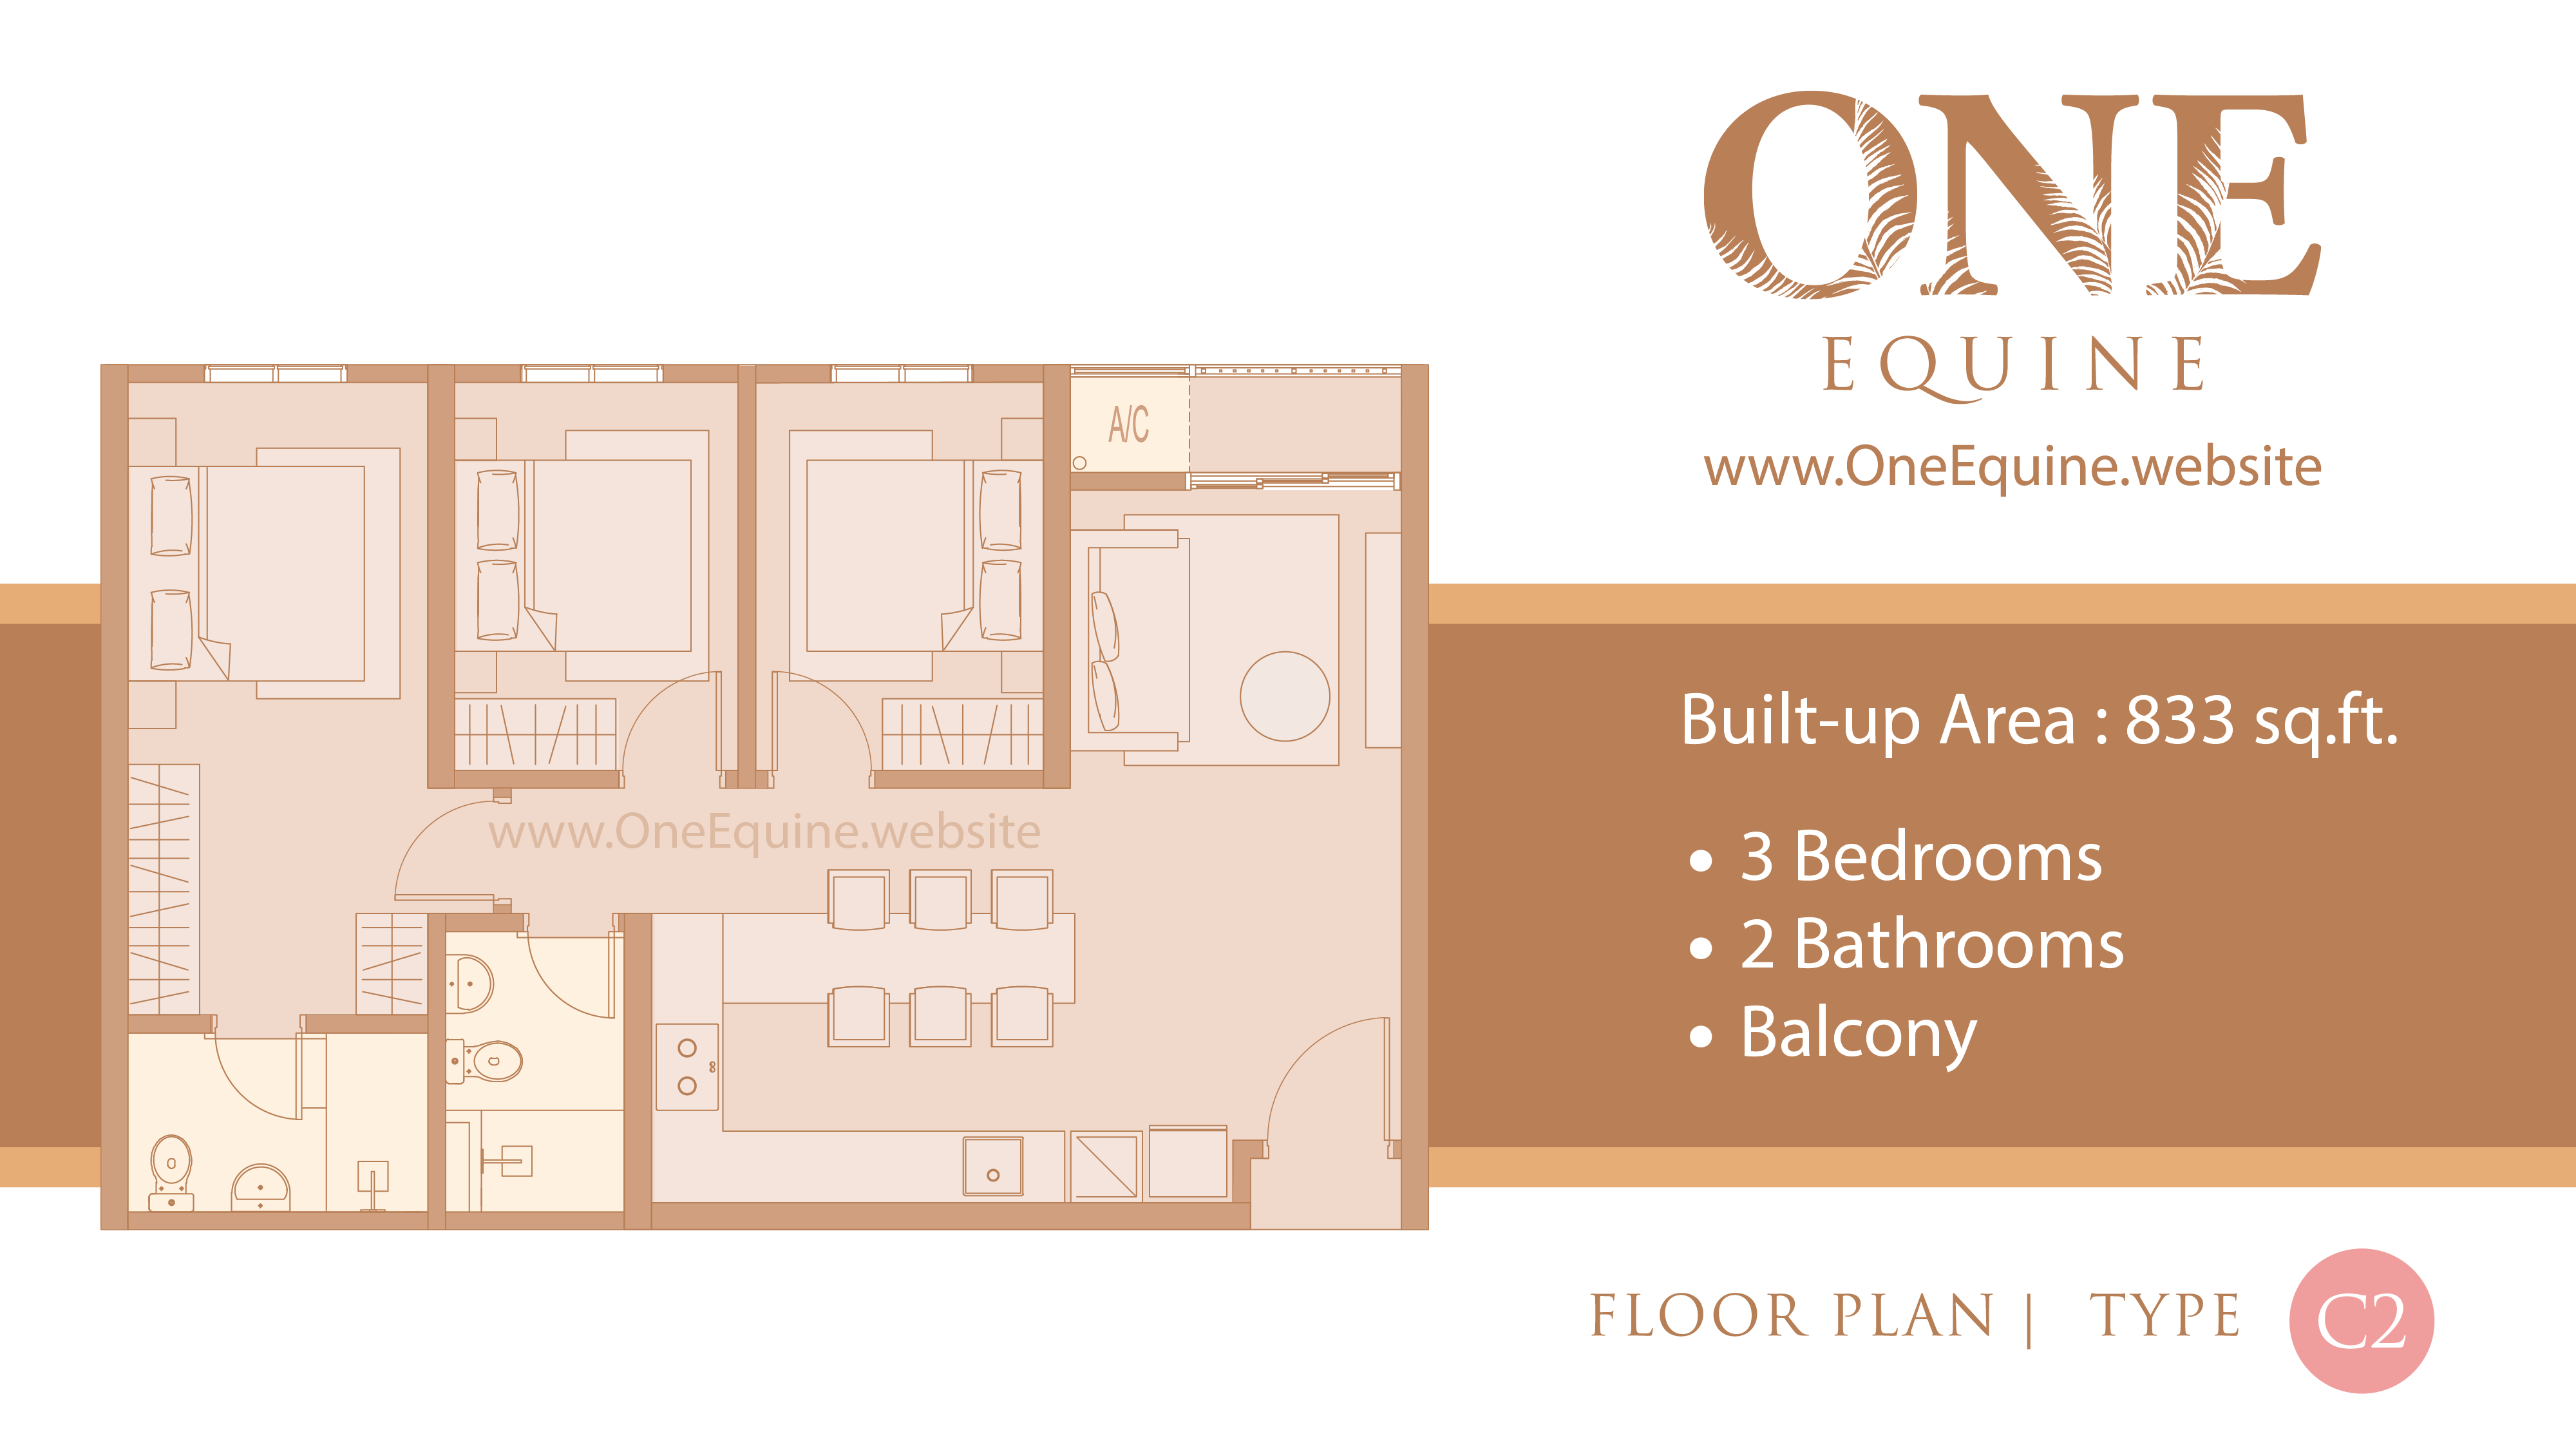 One Equine Park Seri Kembangan - Serviced Apartment 3 Bedrooms 2 Bathrooms Balcony - Floor Plan Type C2 - 833 sqft